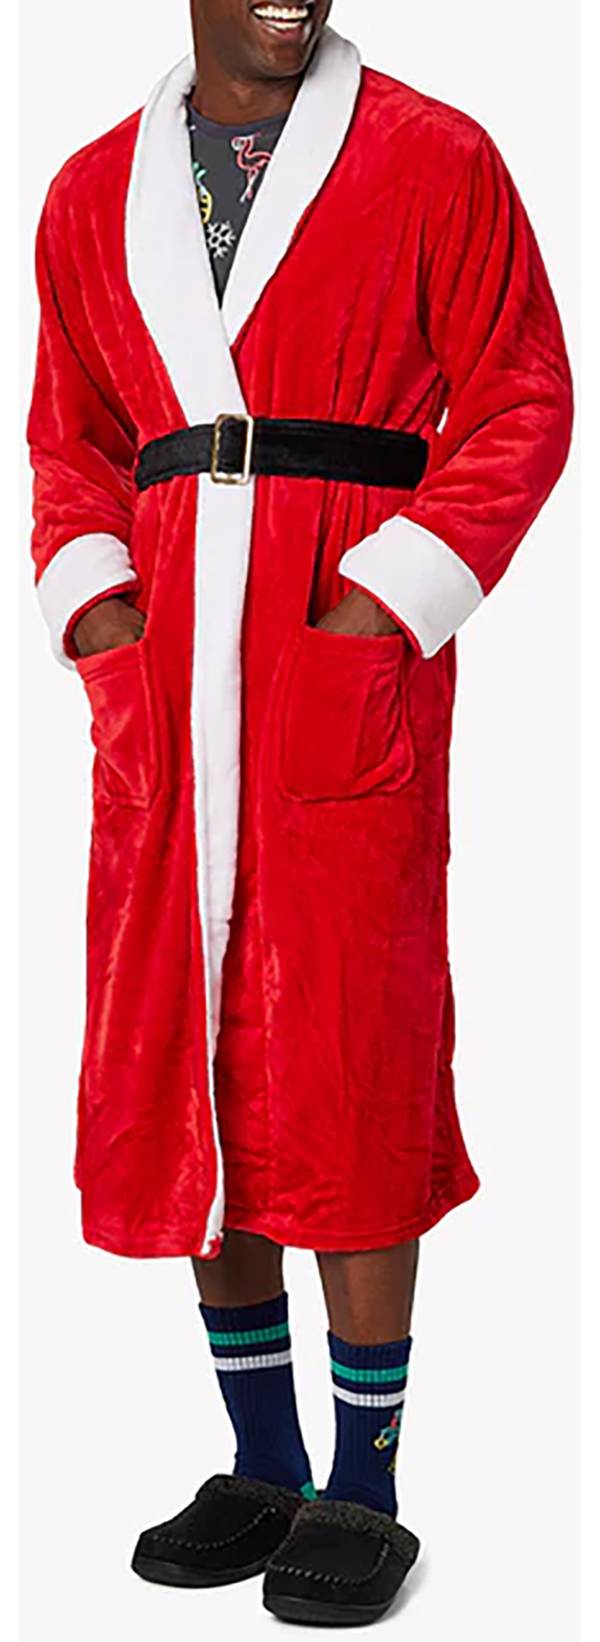 chubbies Men's Super Plush Robe product image